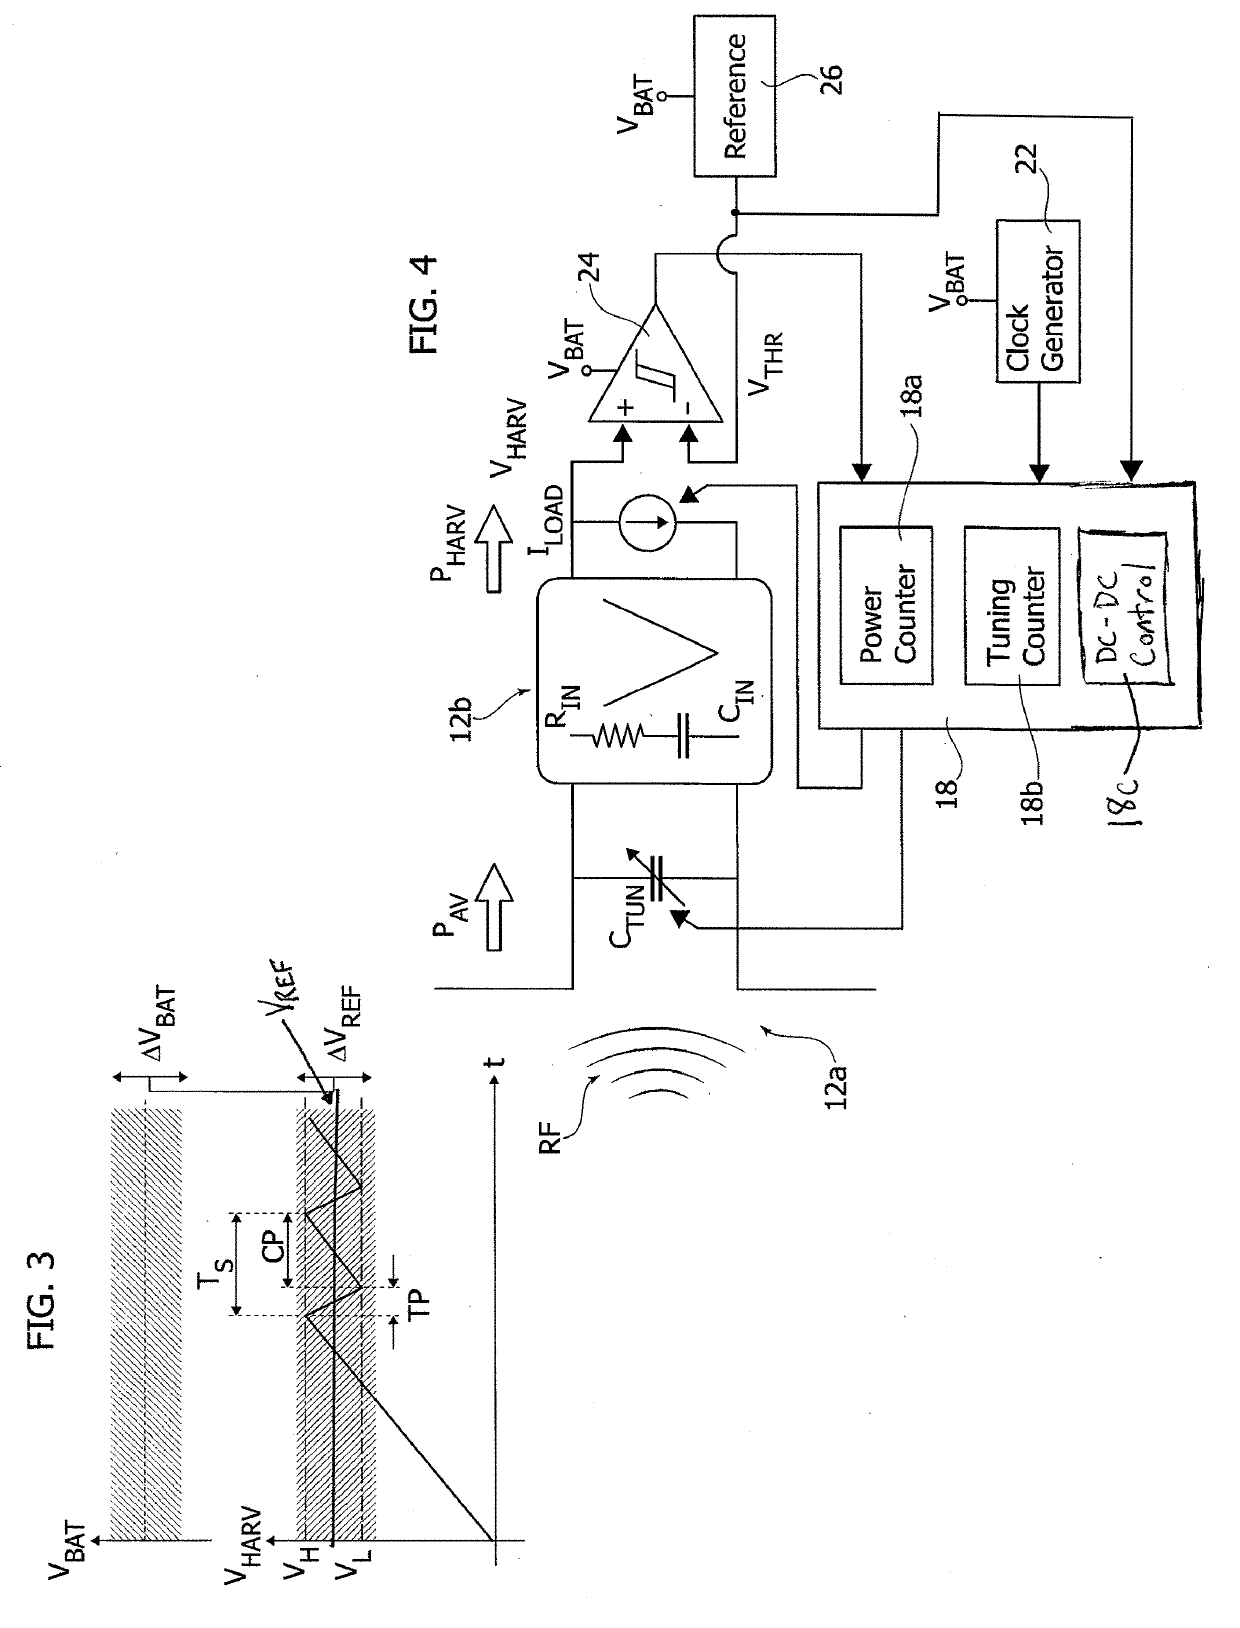 Method of harvesting radio-frequency energy, corresponding circuit and device